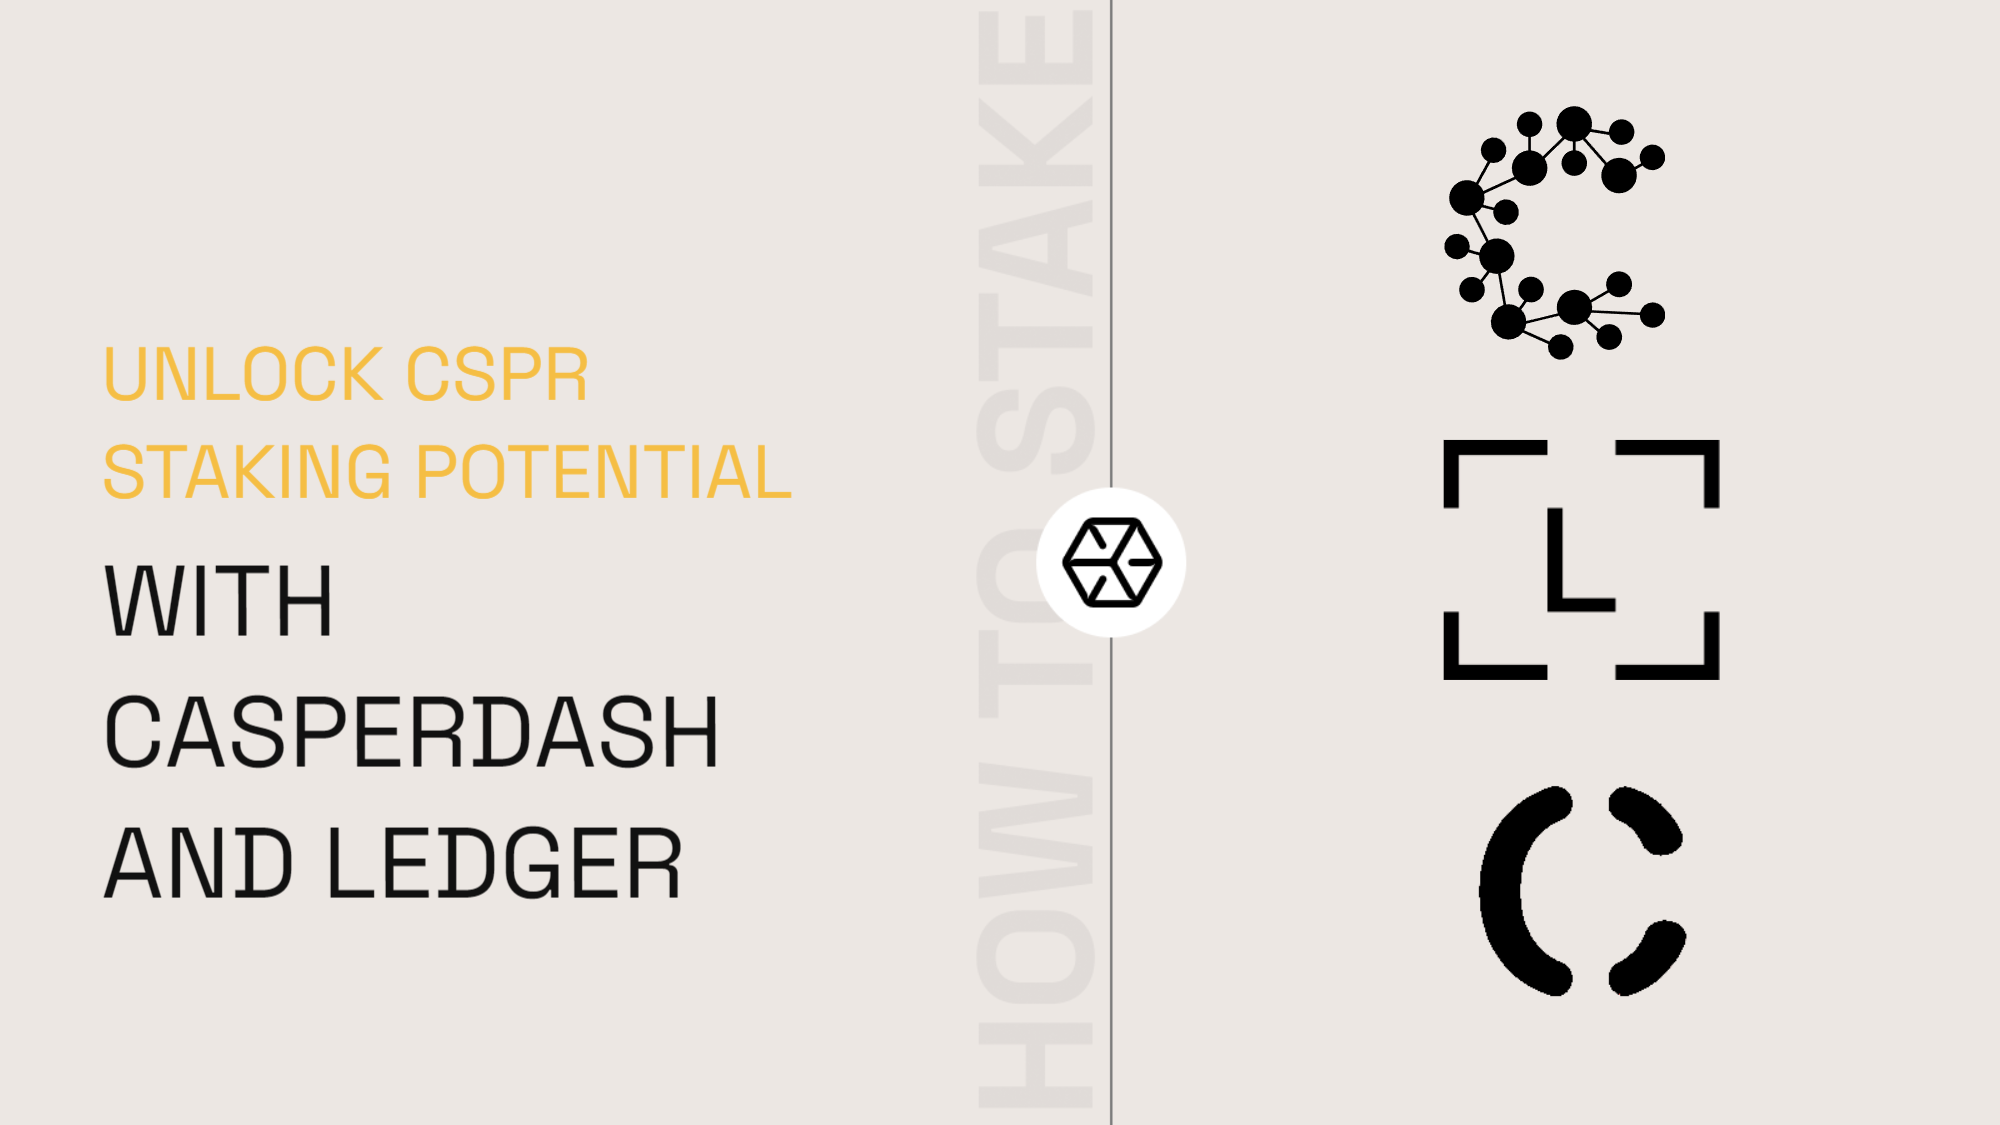 How to Stake CSPR in the CasperDash via Ledger